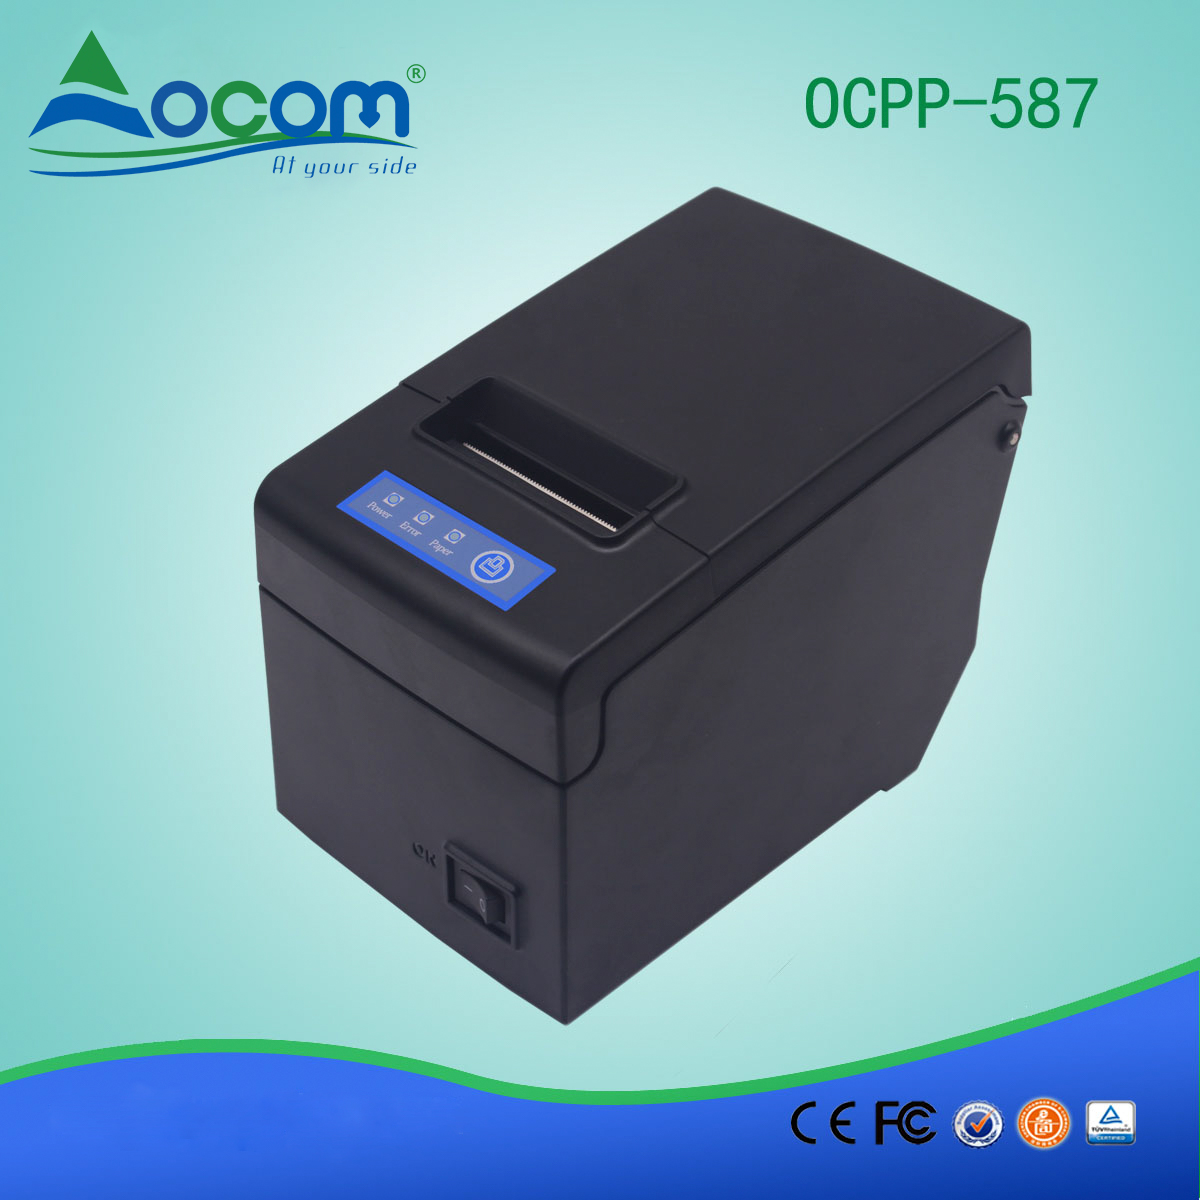 Imprimante de reçus thermiques 58mm OCPP-587-UB USB + Bluetooth Port